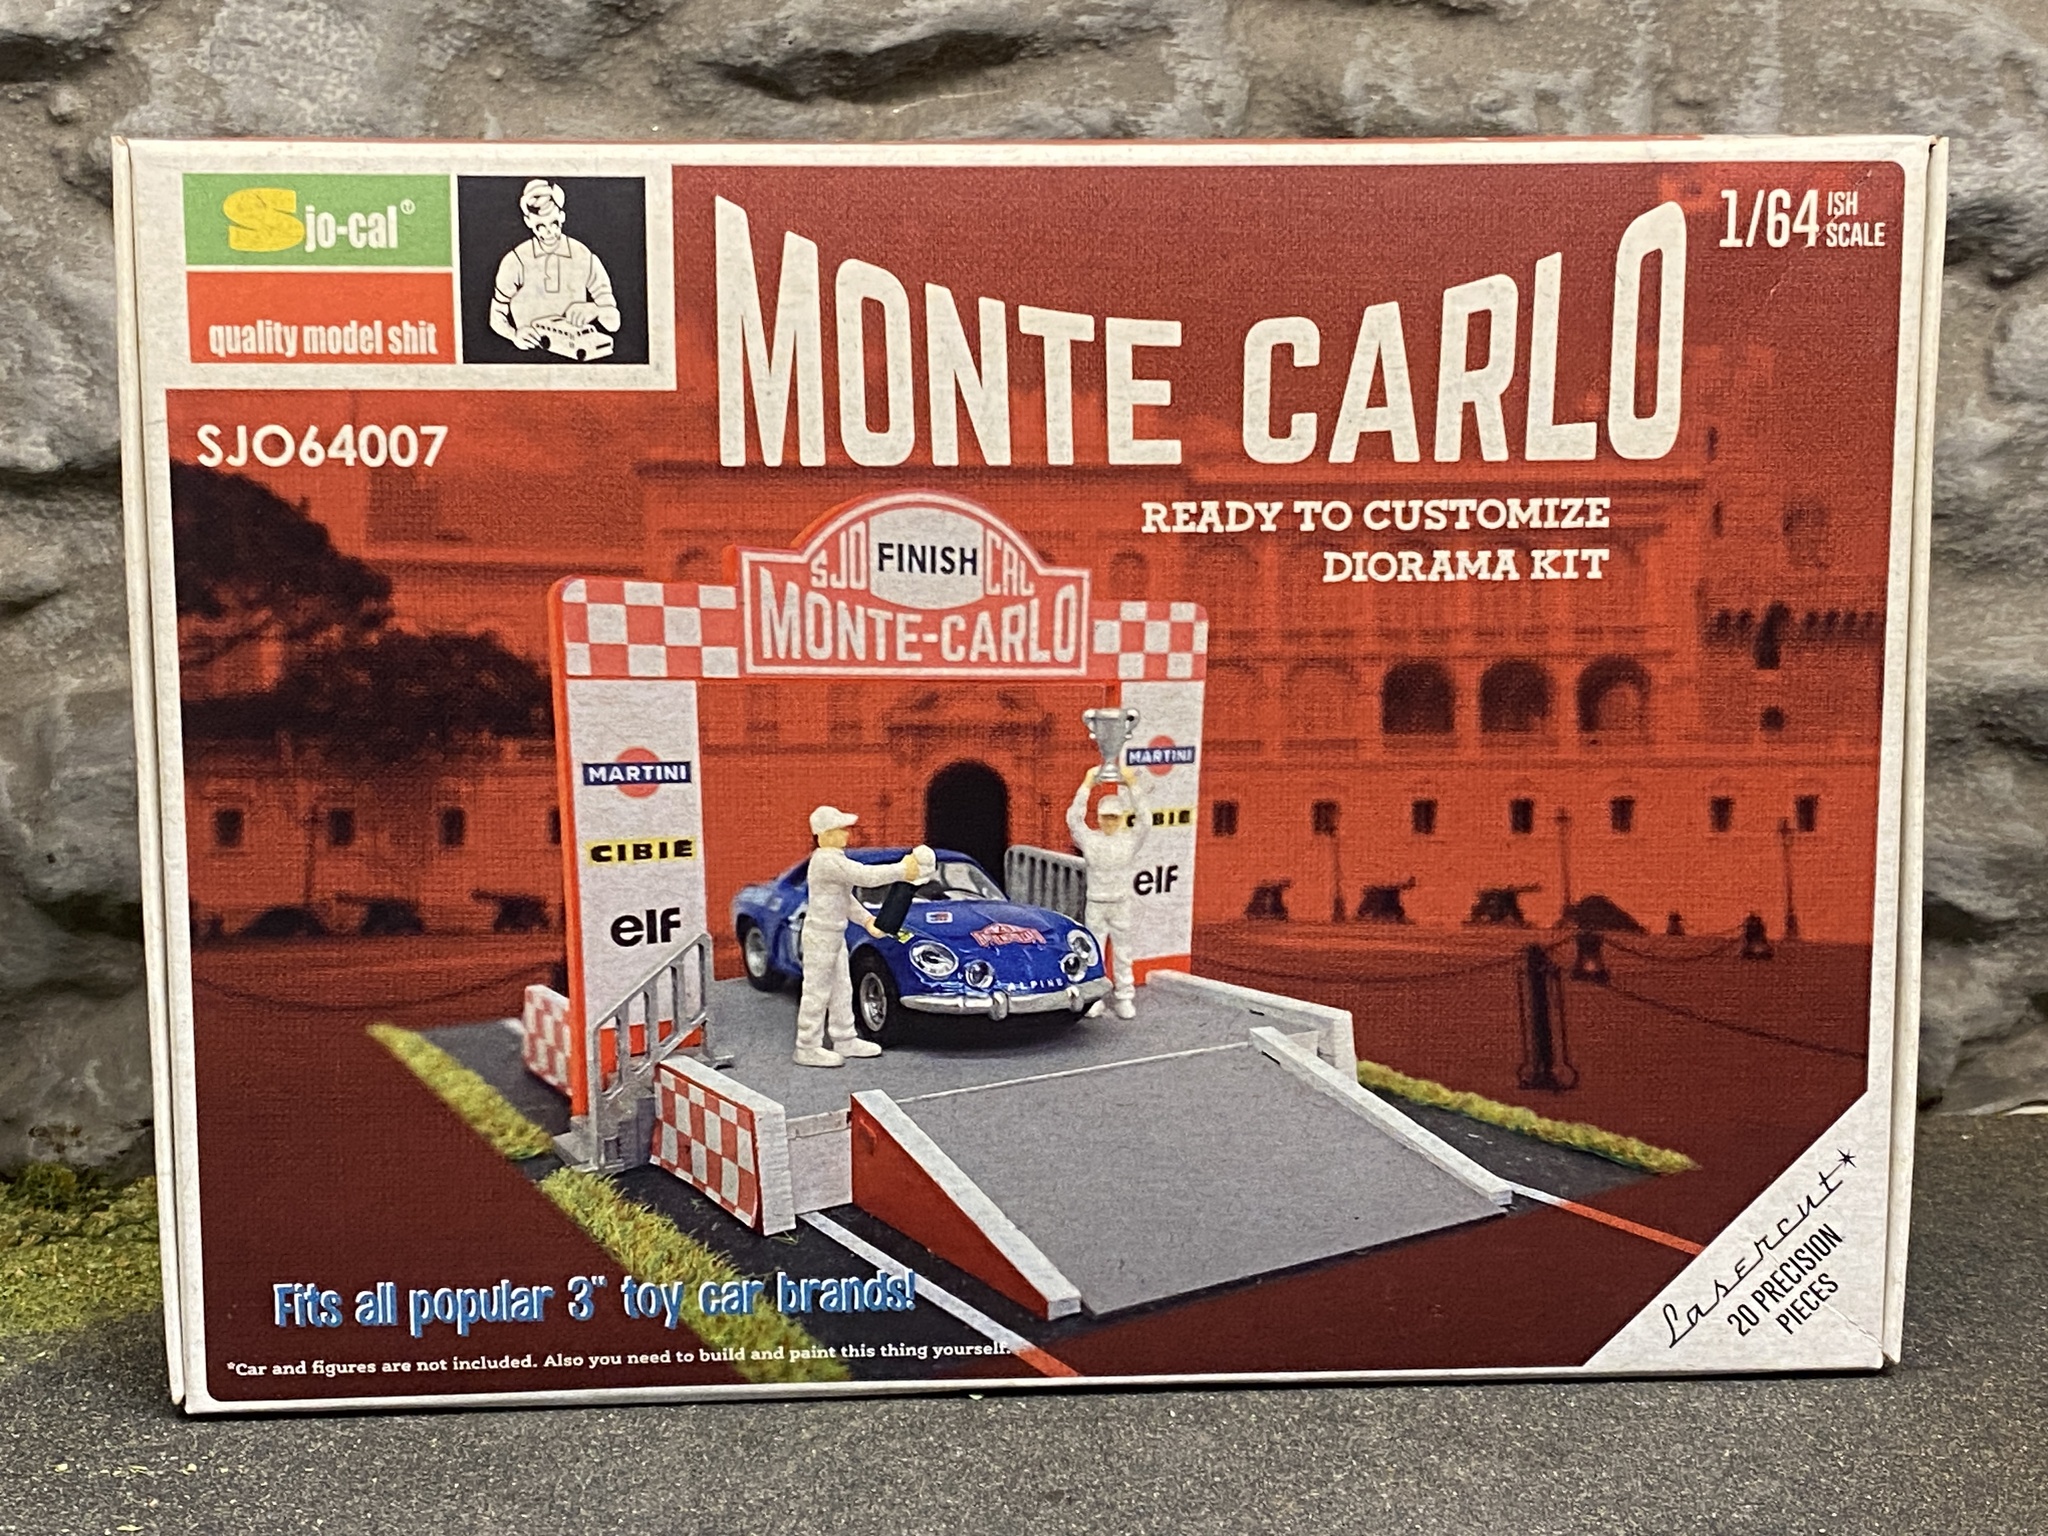 Skala 1/64: Monte Carlo Diorama kit - fin byggsats fr. Sjo-cal